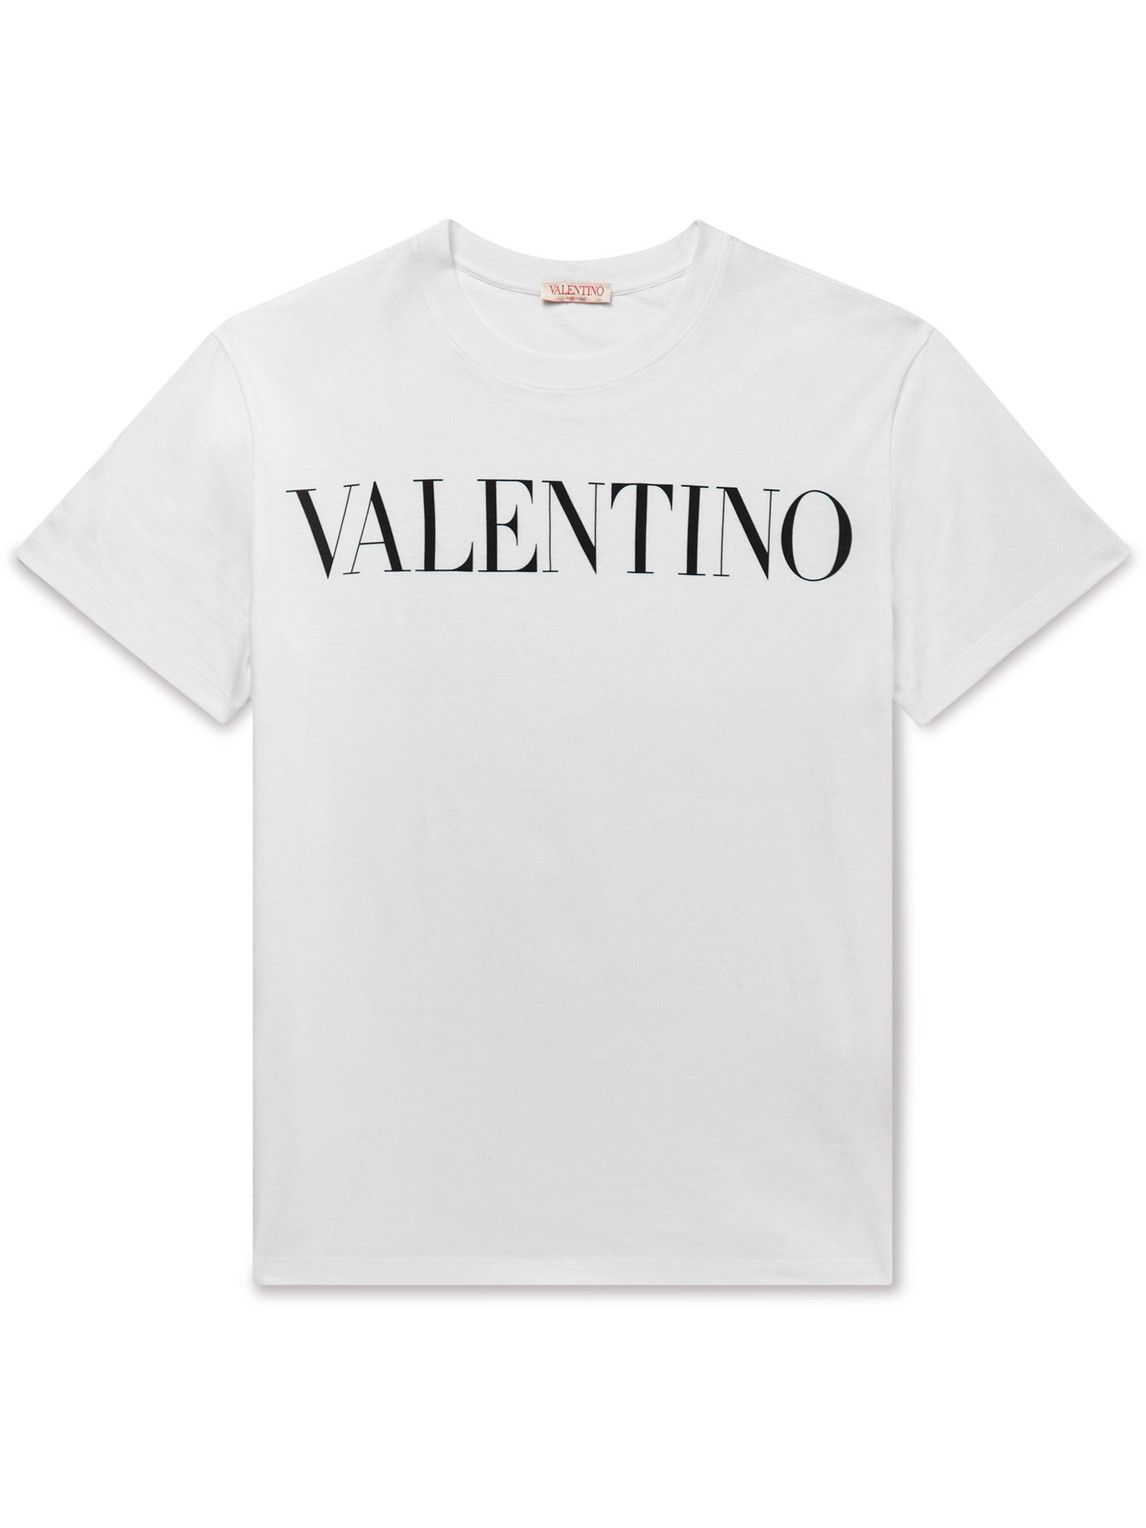 Valentino - Logo-Print Cotton-Jersey T-Shirt - White Valentino